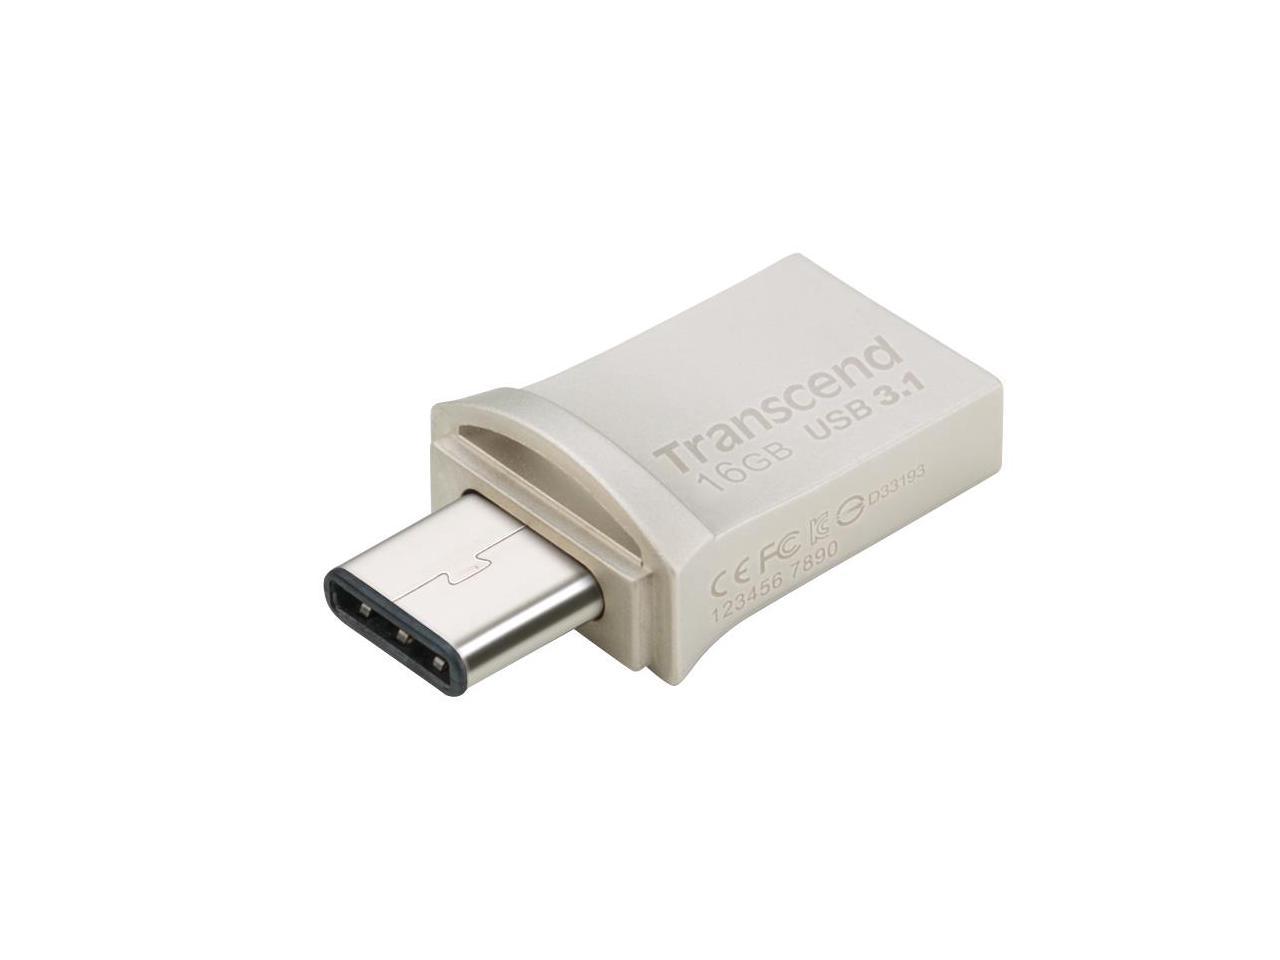 16GB Transcend JetFlash 890S OTG Flash Drive with USB3.1 and USB Type-C Connectors